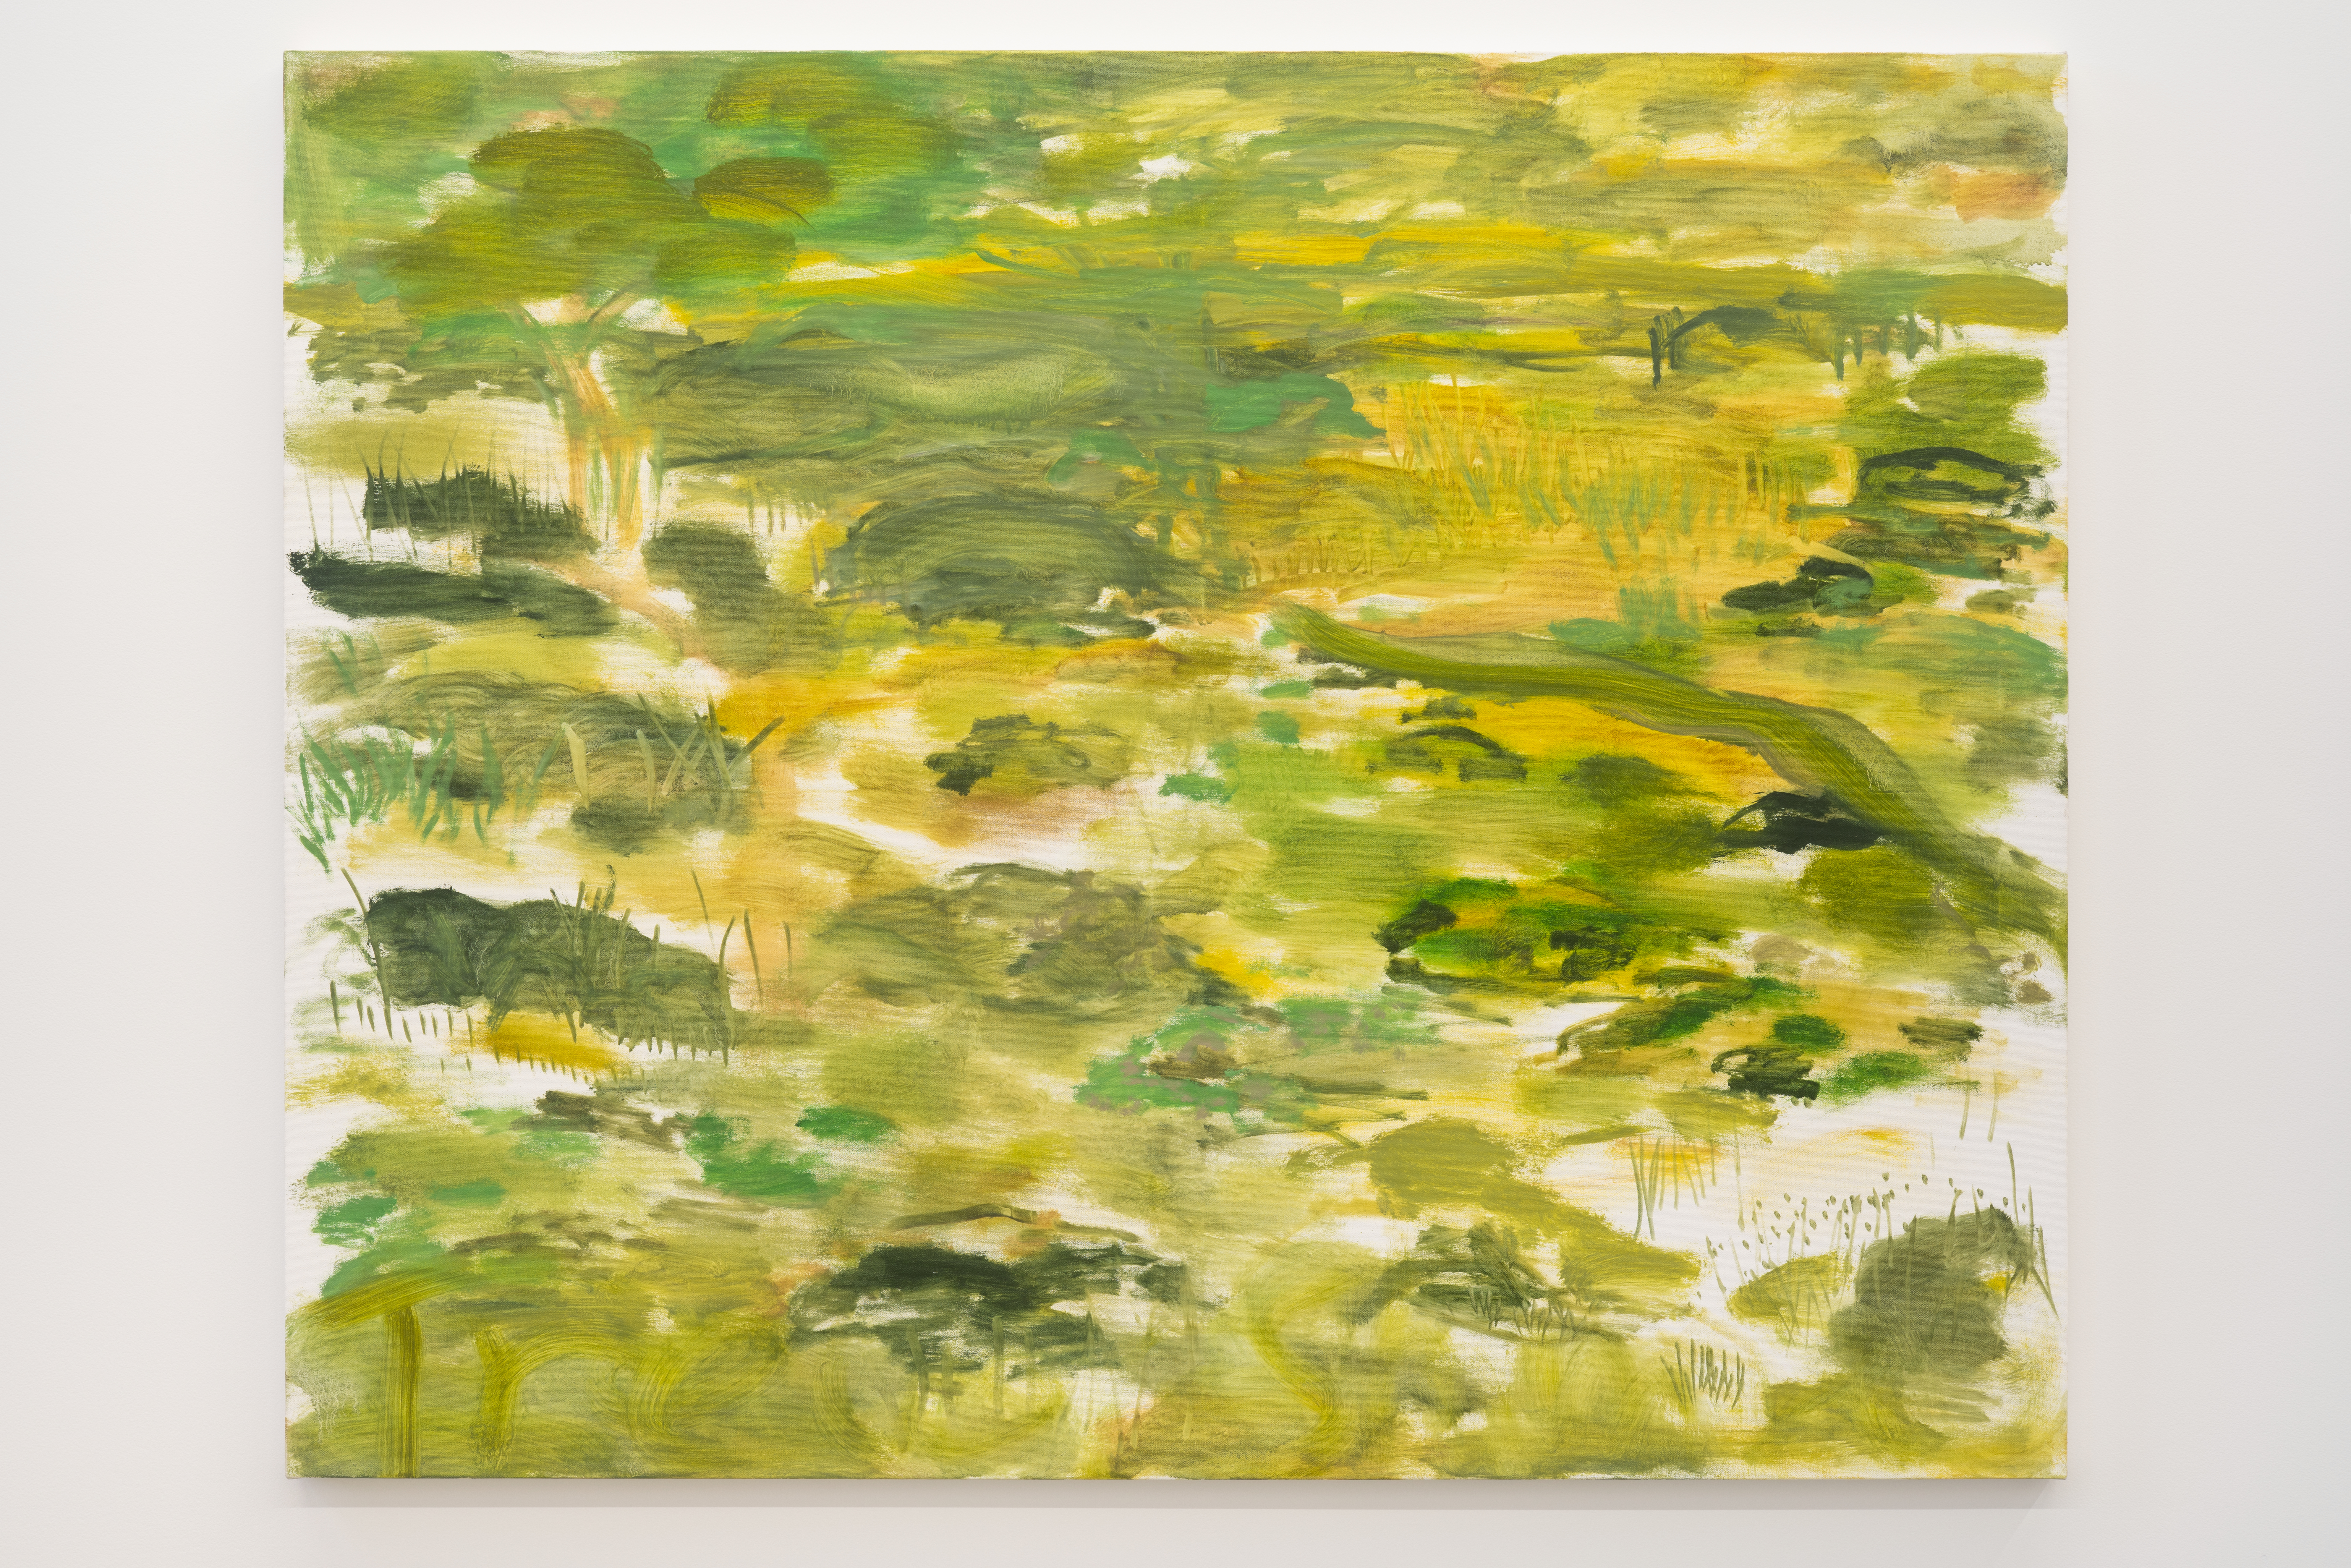 Trevor Shimizu
Moss Garden (3), 2019
Oil on canvas
40 x 50 inches
101.6 x 127 cm